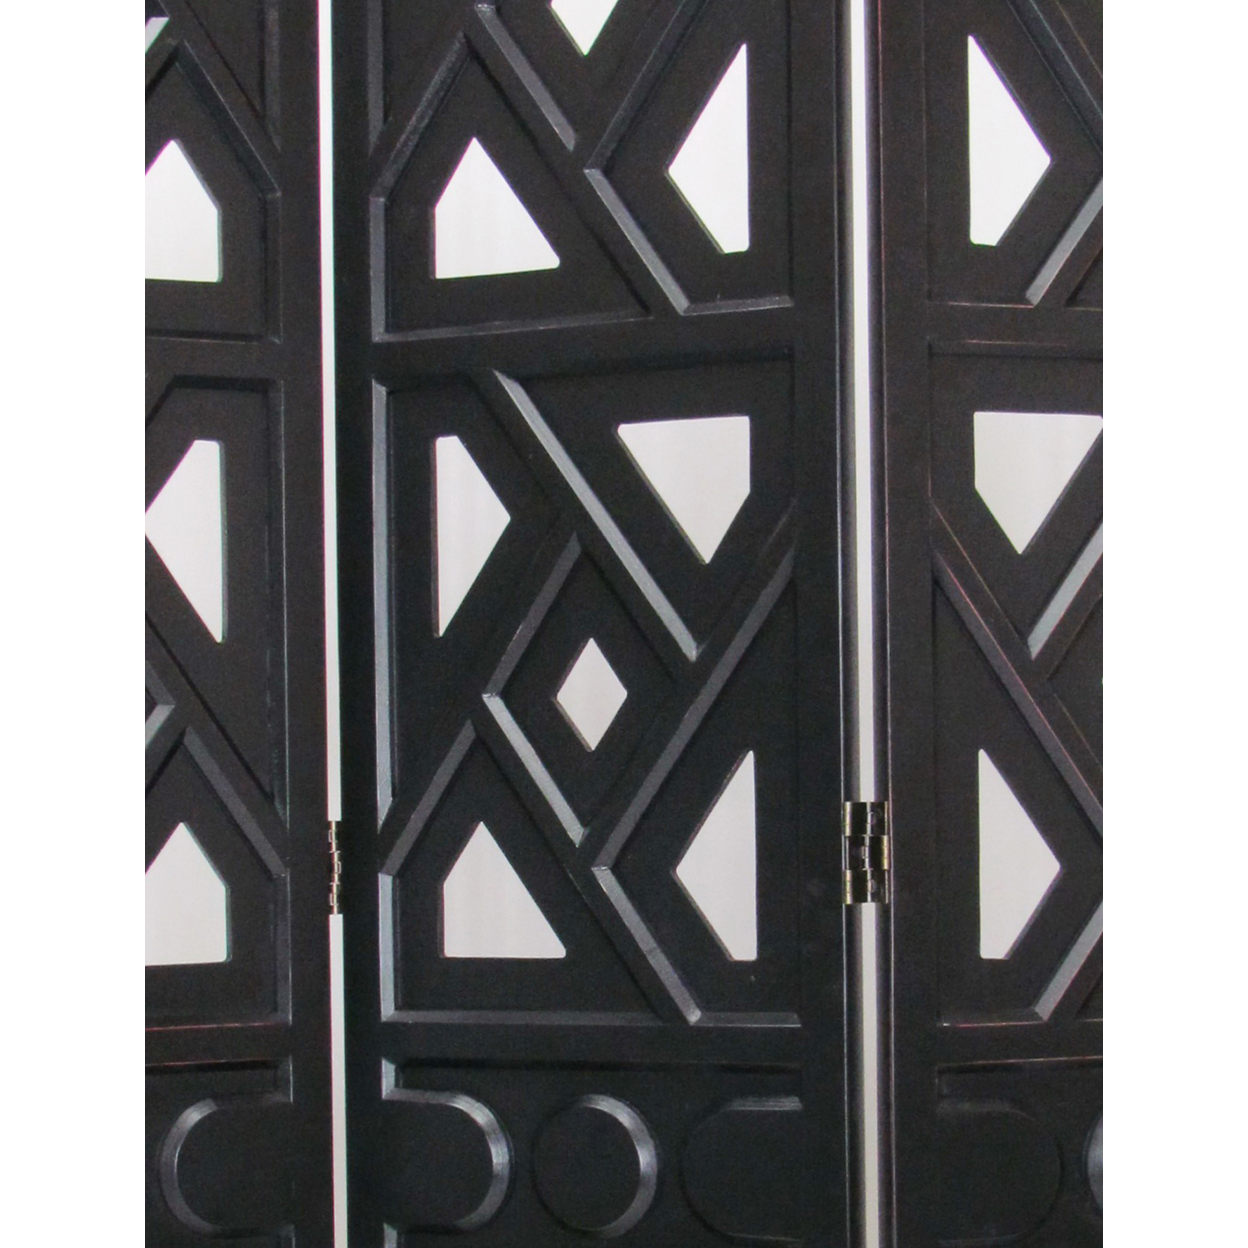 Wooden 3 Panel Room Divider With Geometric Design, Black- Saltoro Sherpi